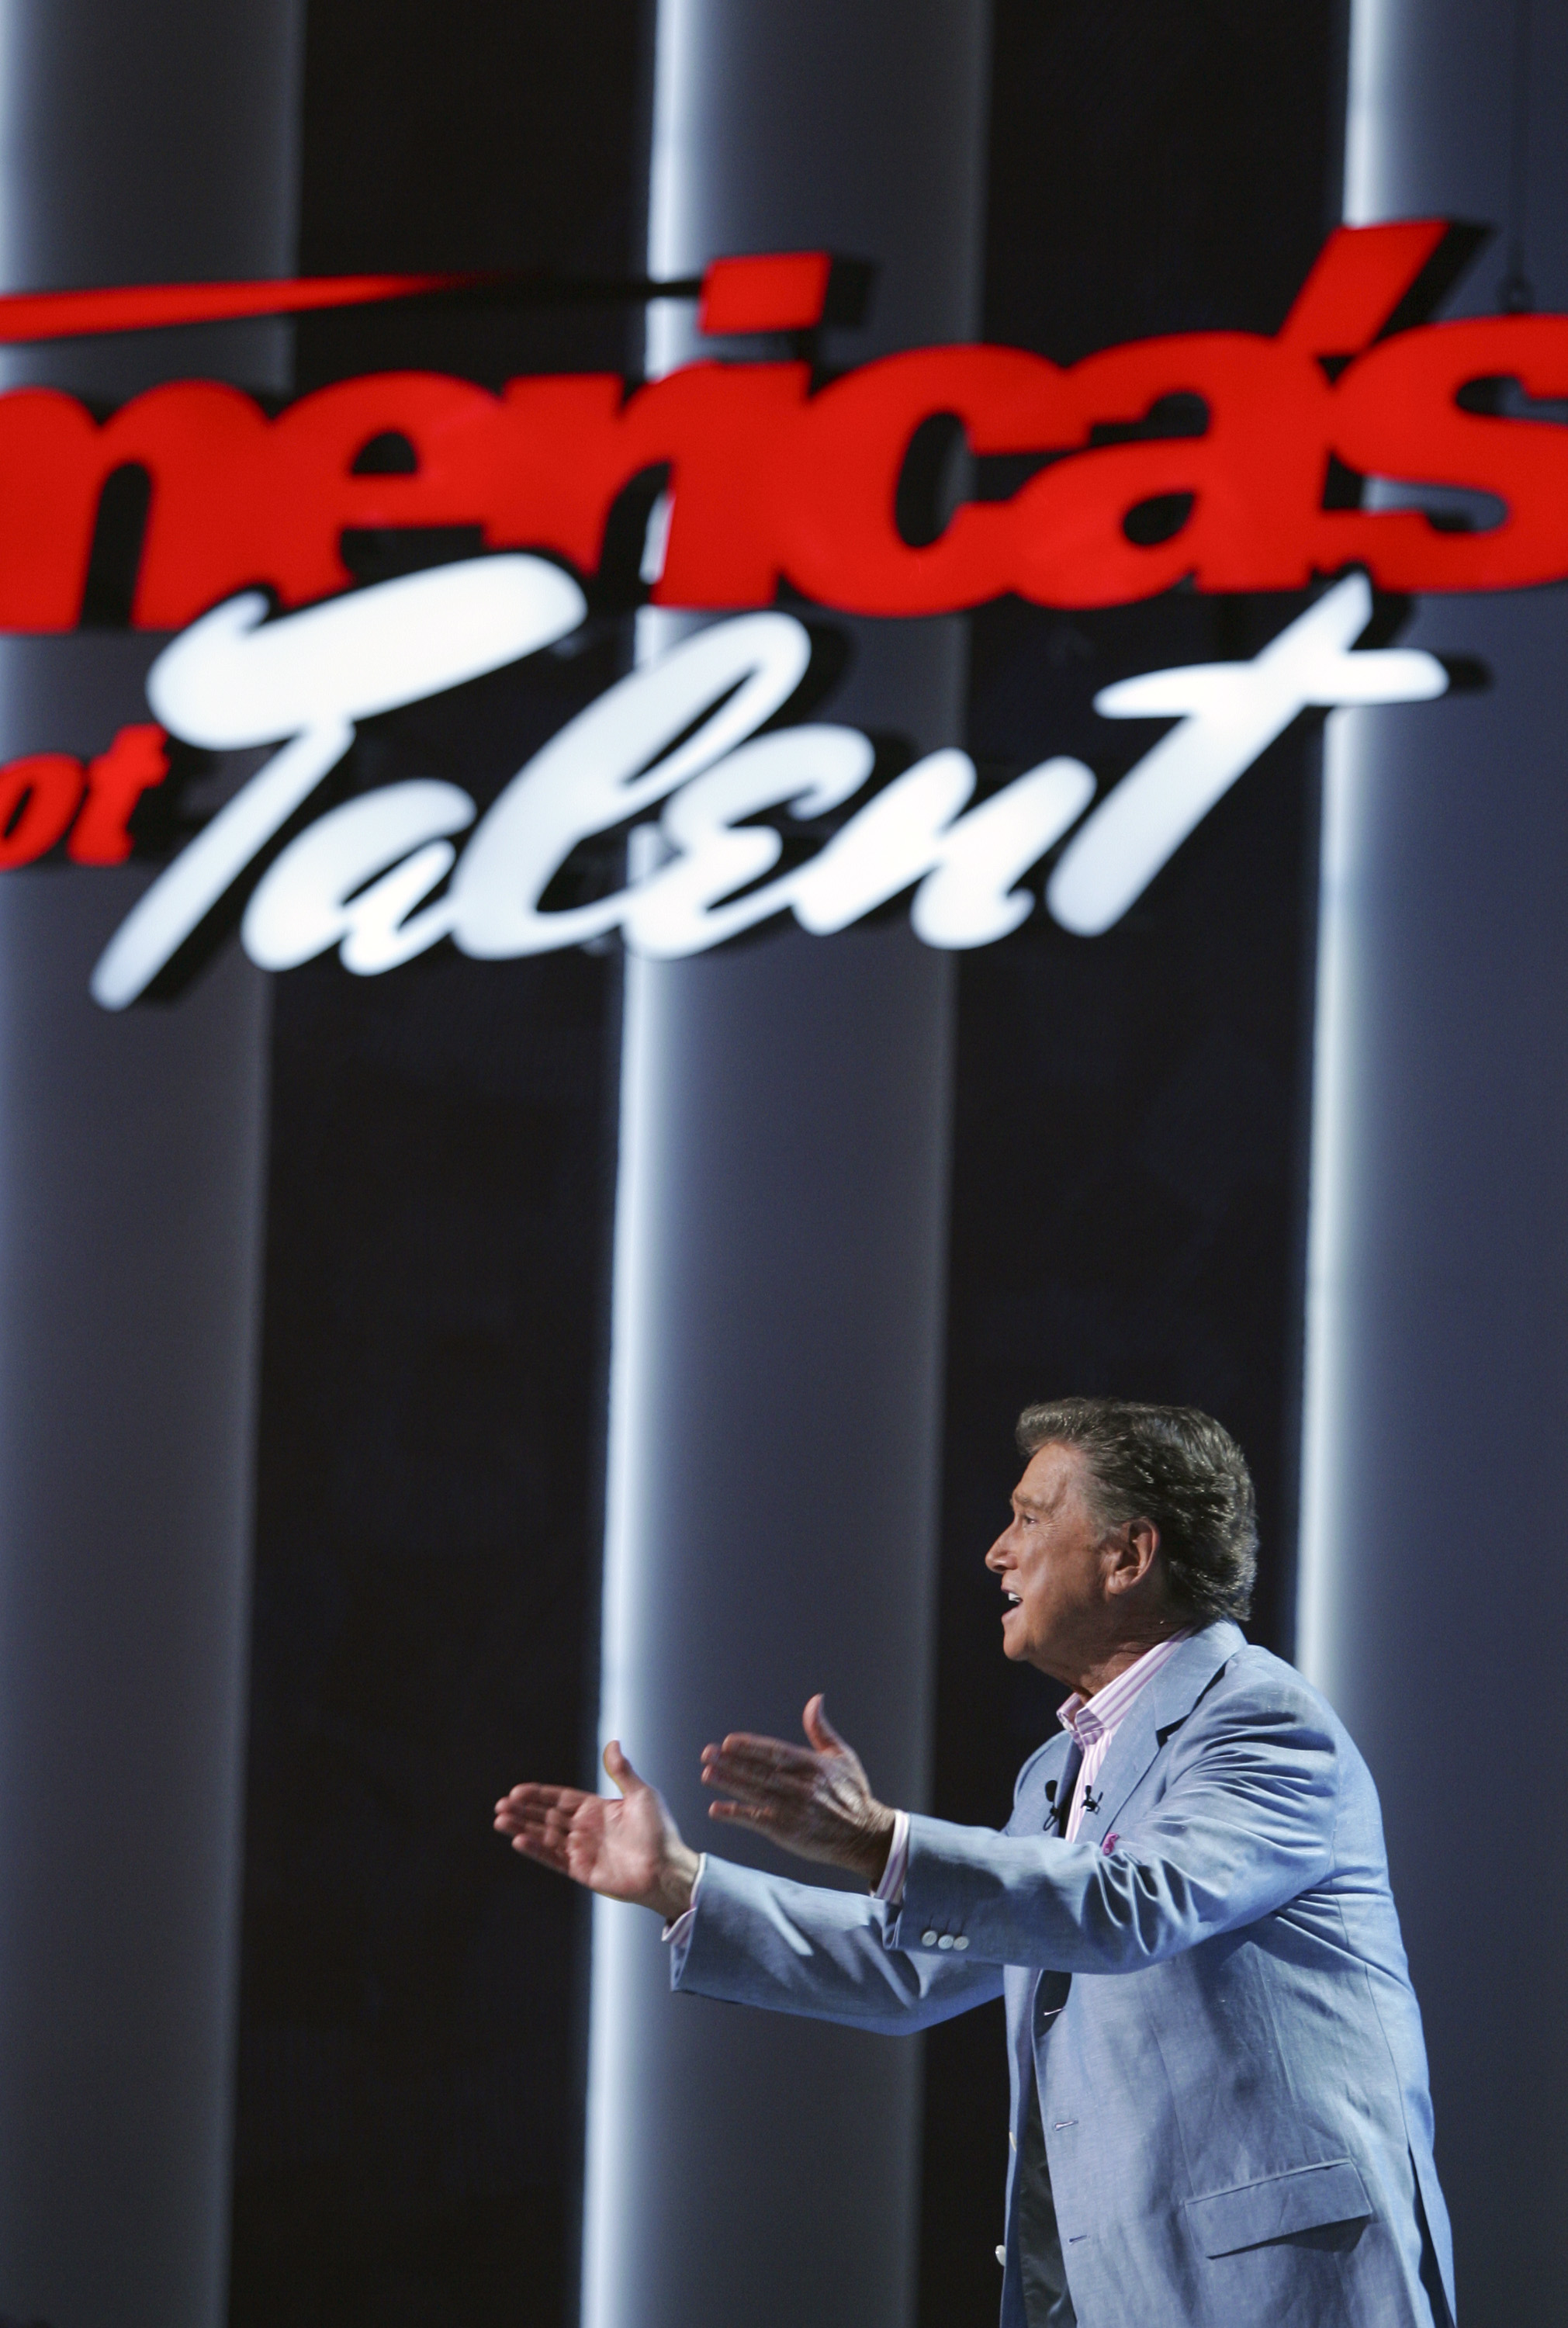 Regis Philbin on 'America's Got Talent'